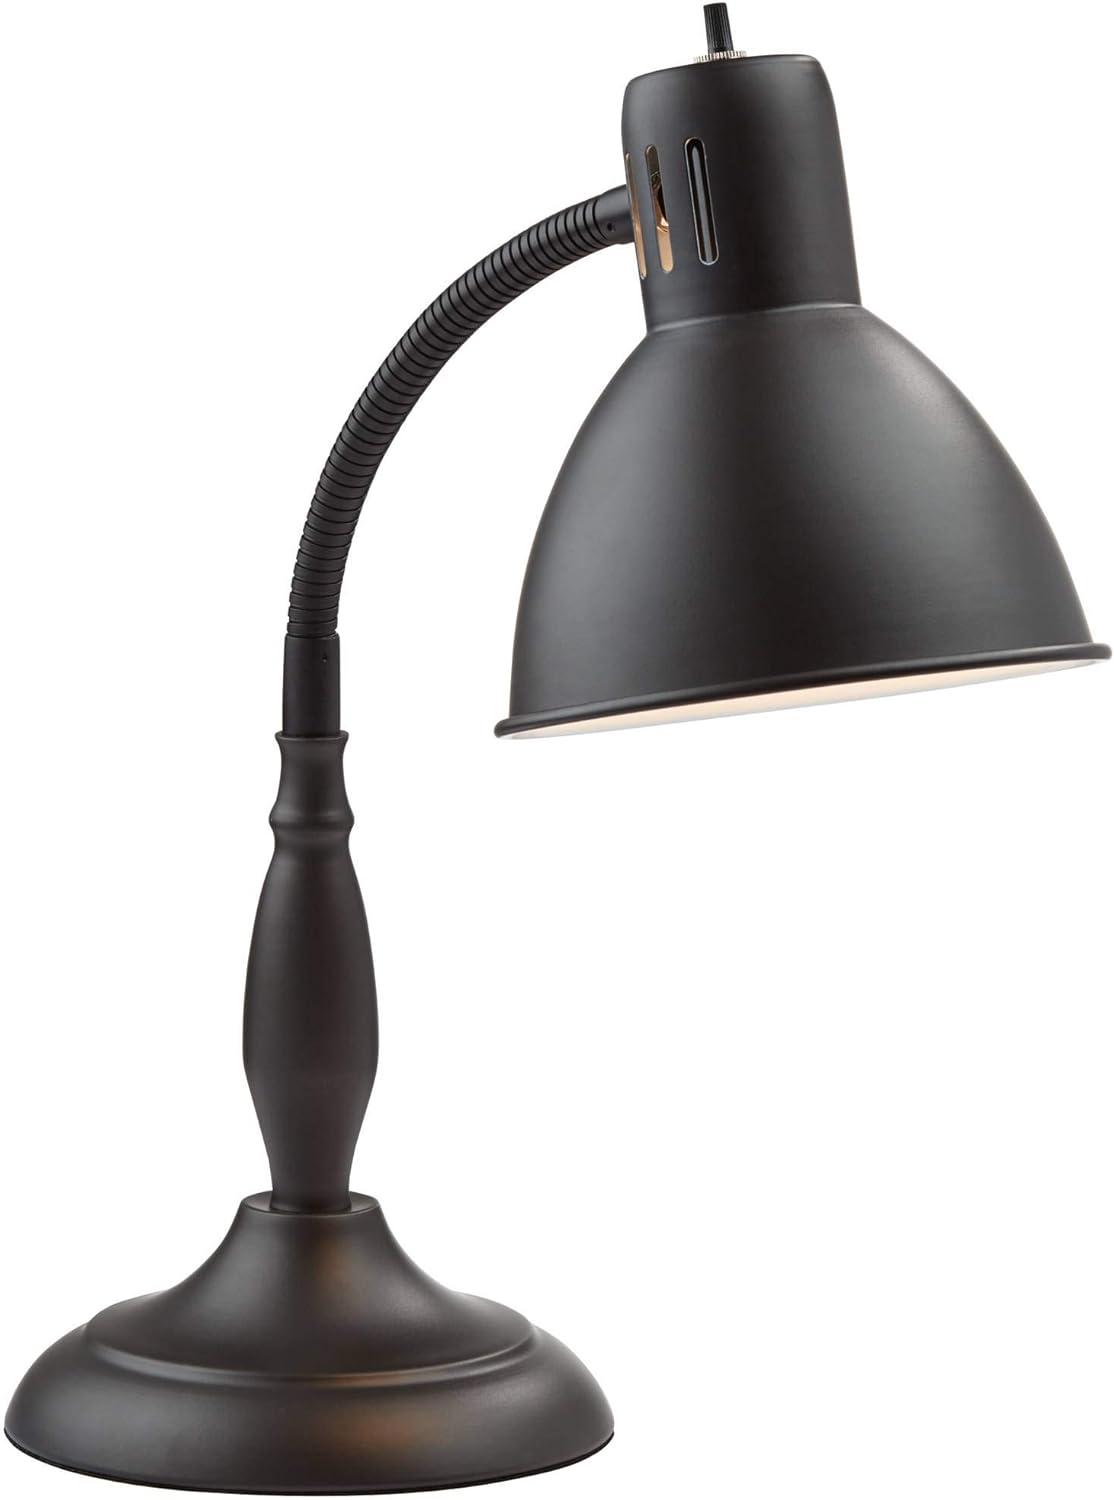 Adjustable Arc Kids Desk Lamp in Dark Bronze with Gooseneck